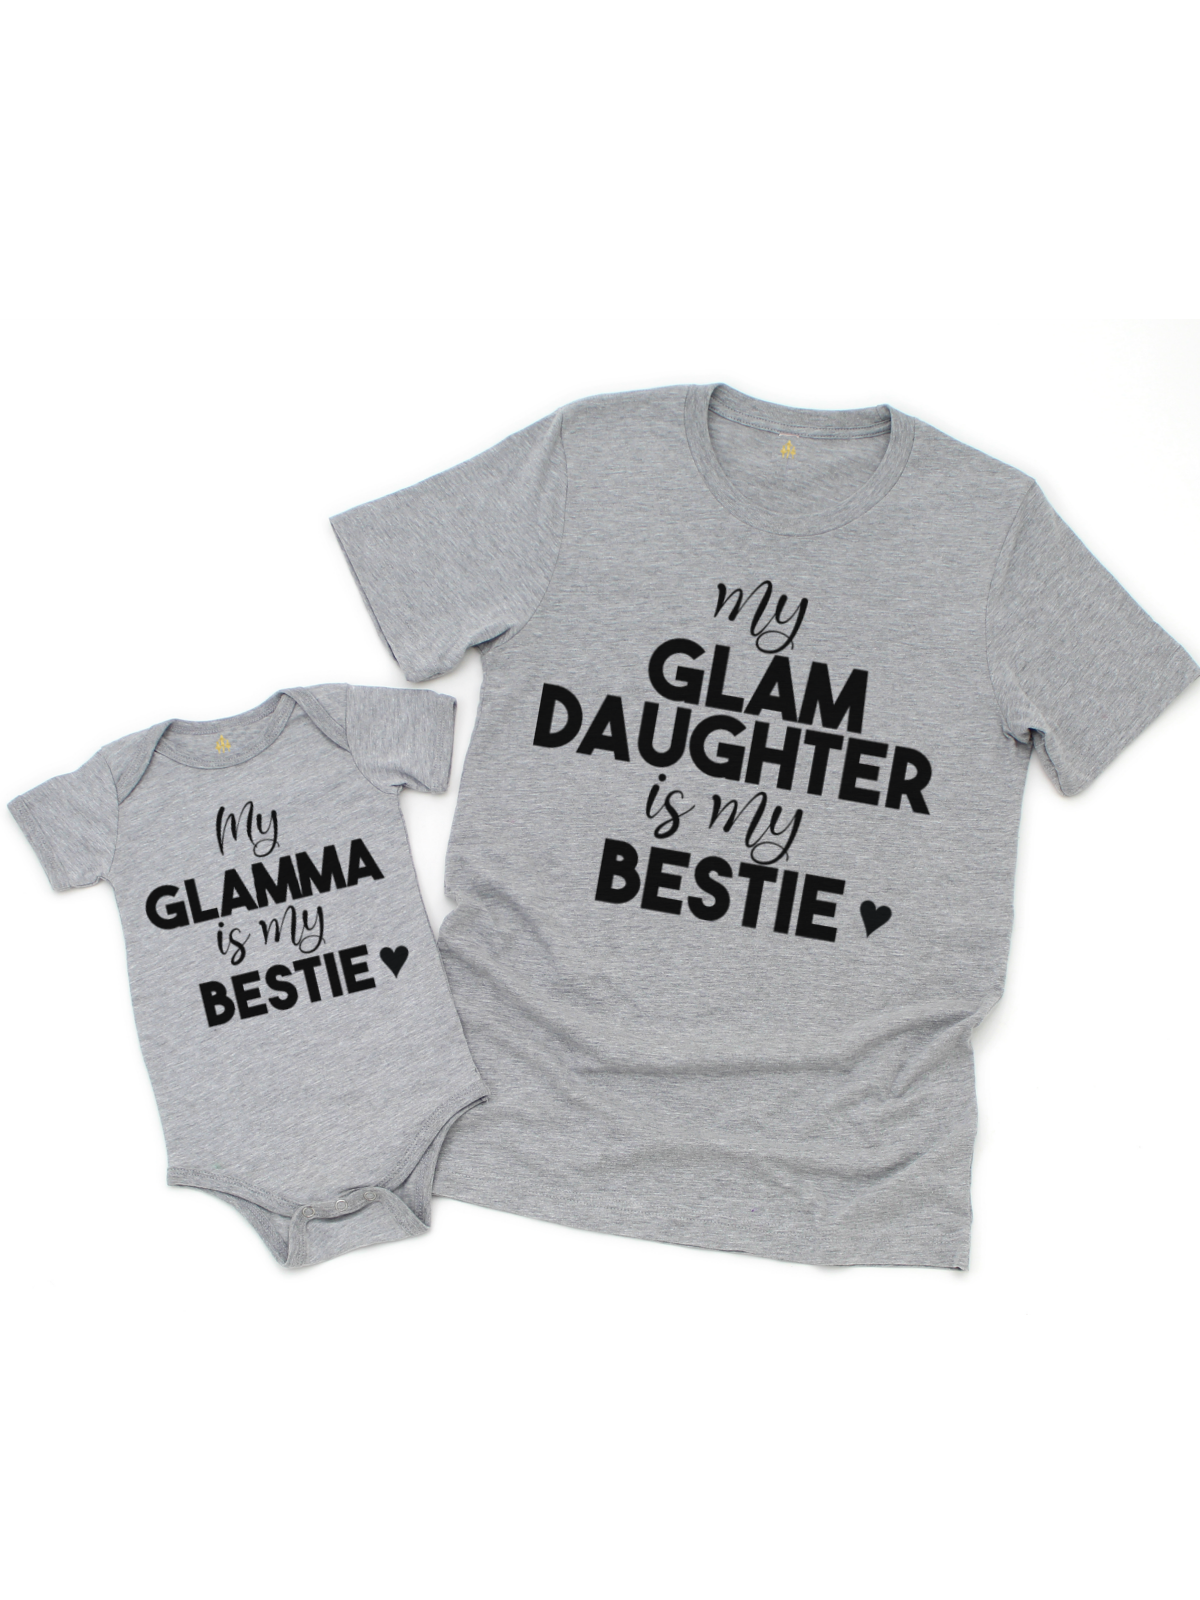 My Glam Daughter is My Bestie and My Glamma is my Bestie Matching Tops